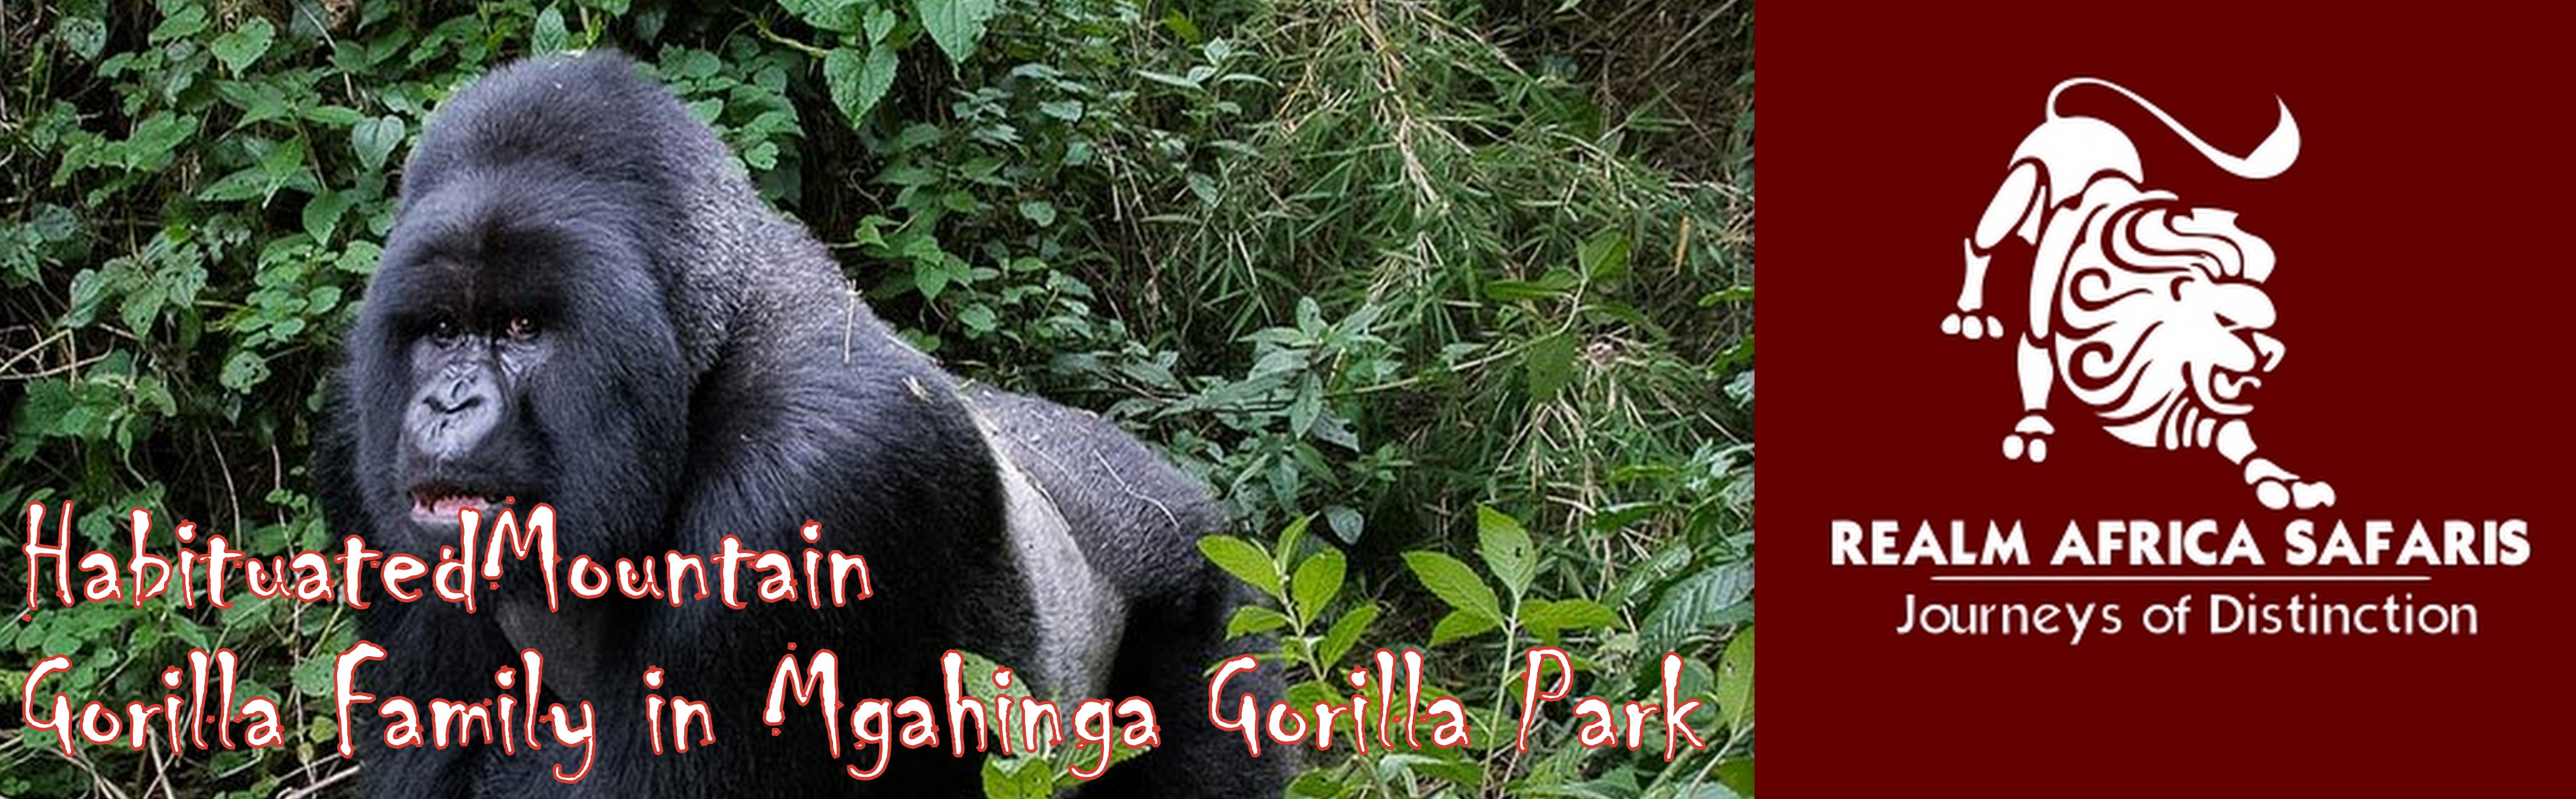 Habituated mountian Gorilla Family In Mgahinga Gorilla Park | Realm Africa Safaris™